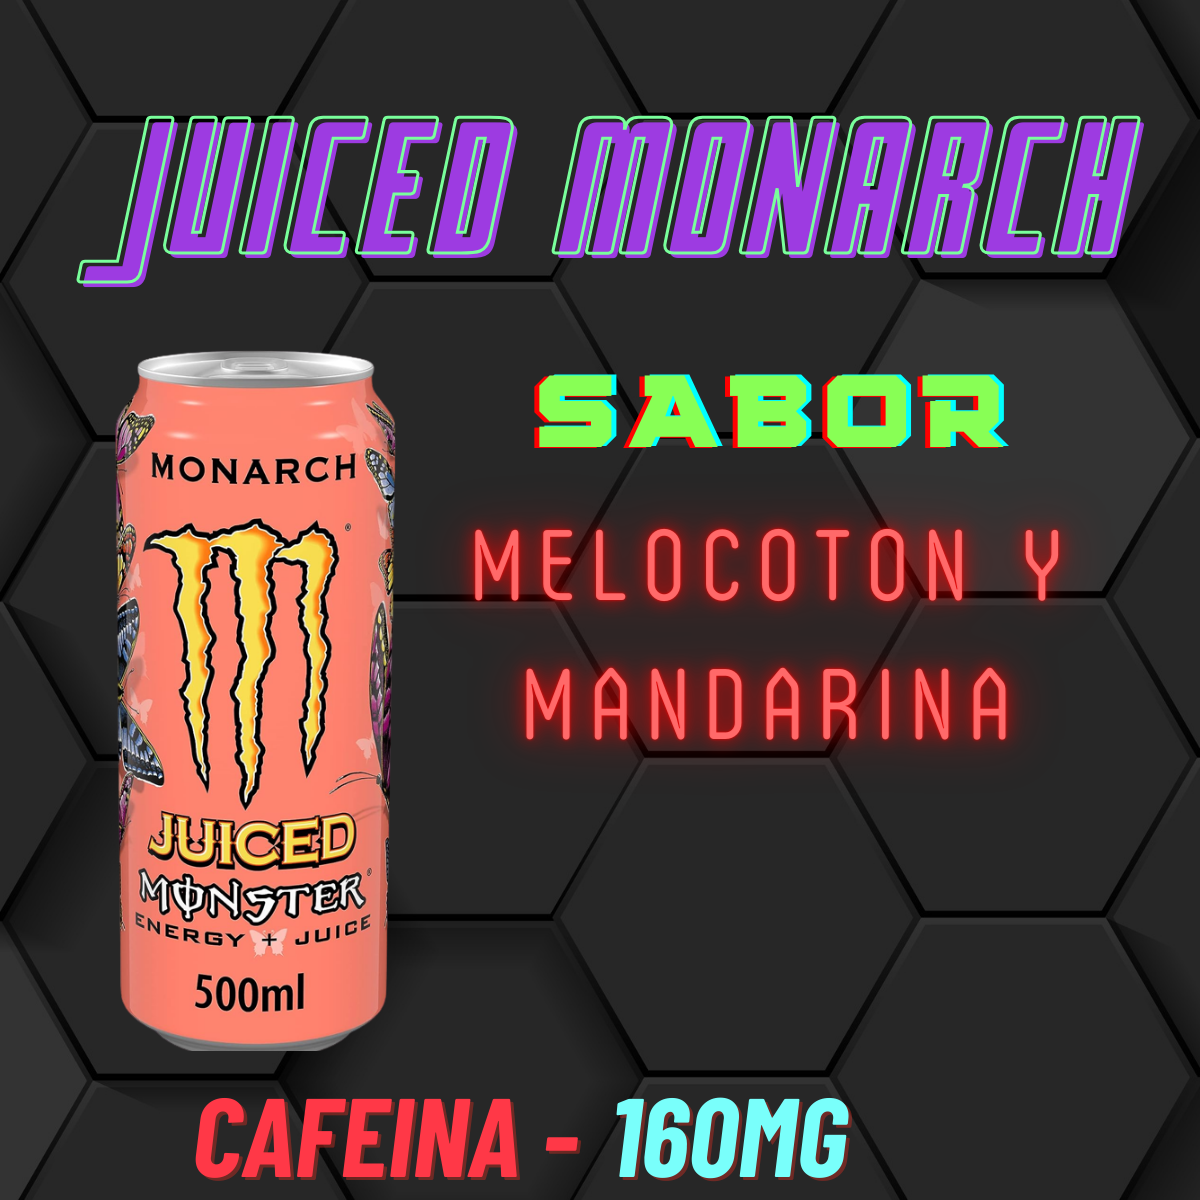 monster juiced monarch